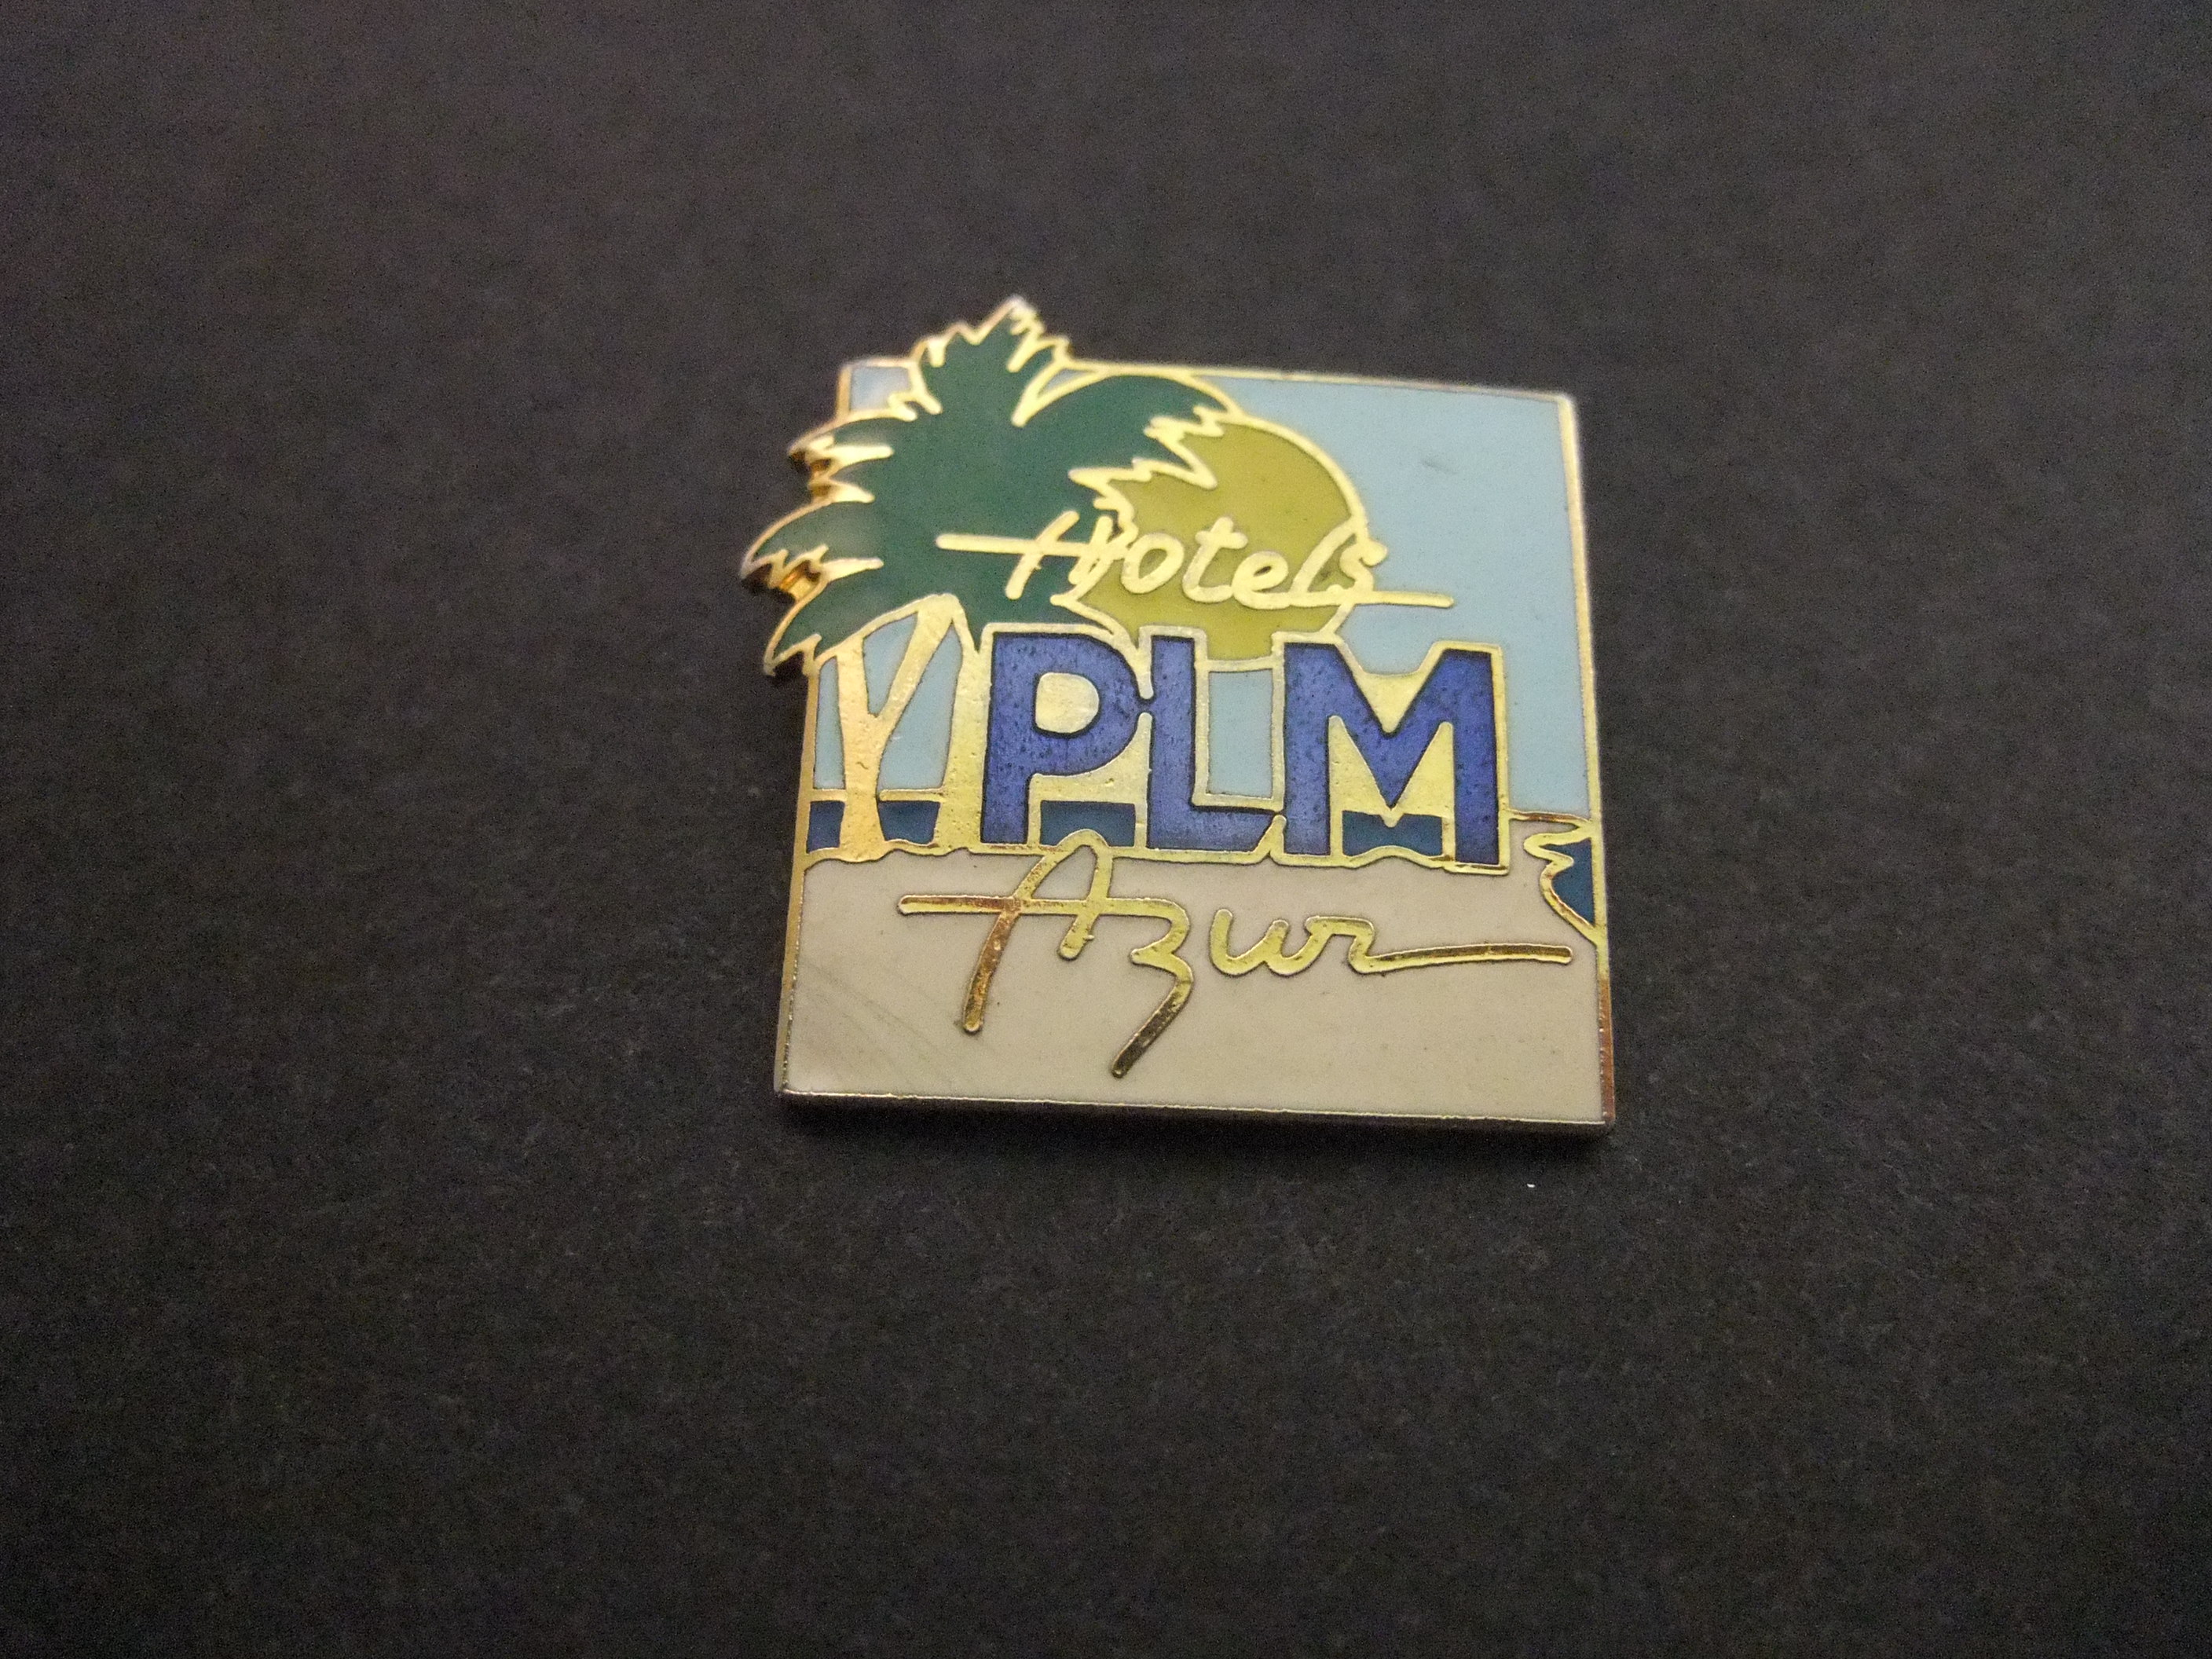 PLM hotels Cote d'Azur France ( palmboom)